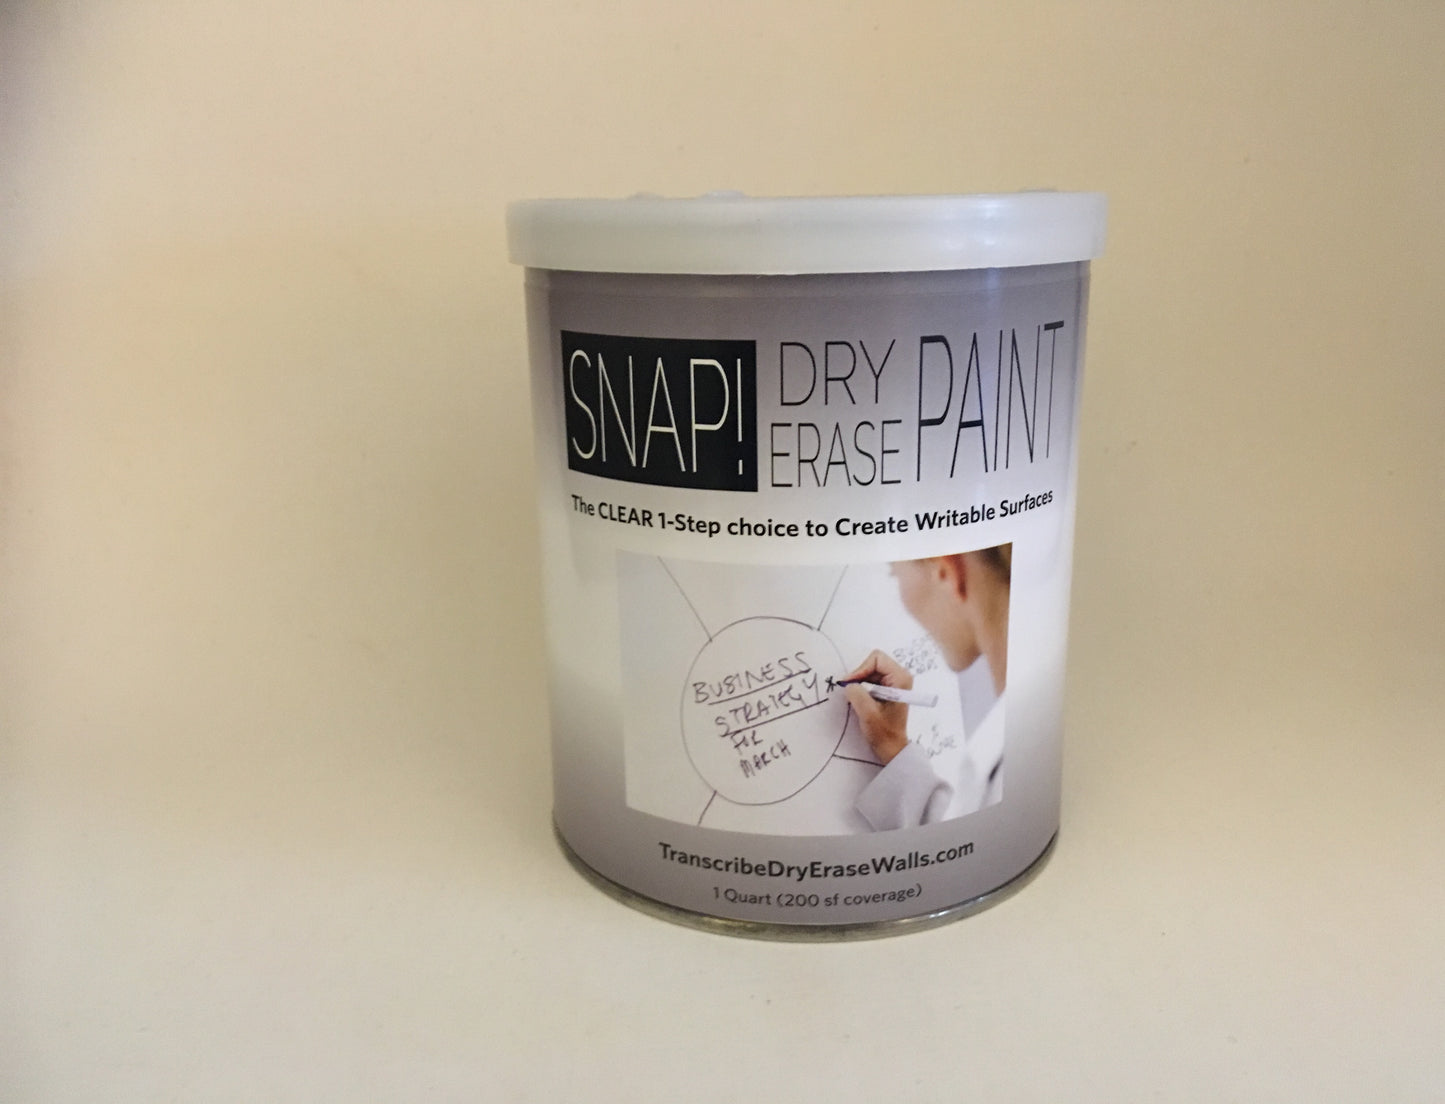 SNAP! Dry Erase Paint